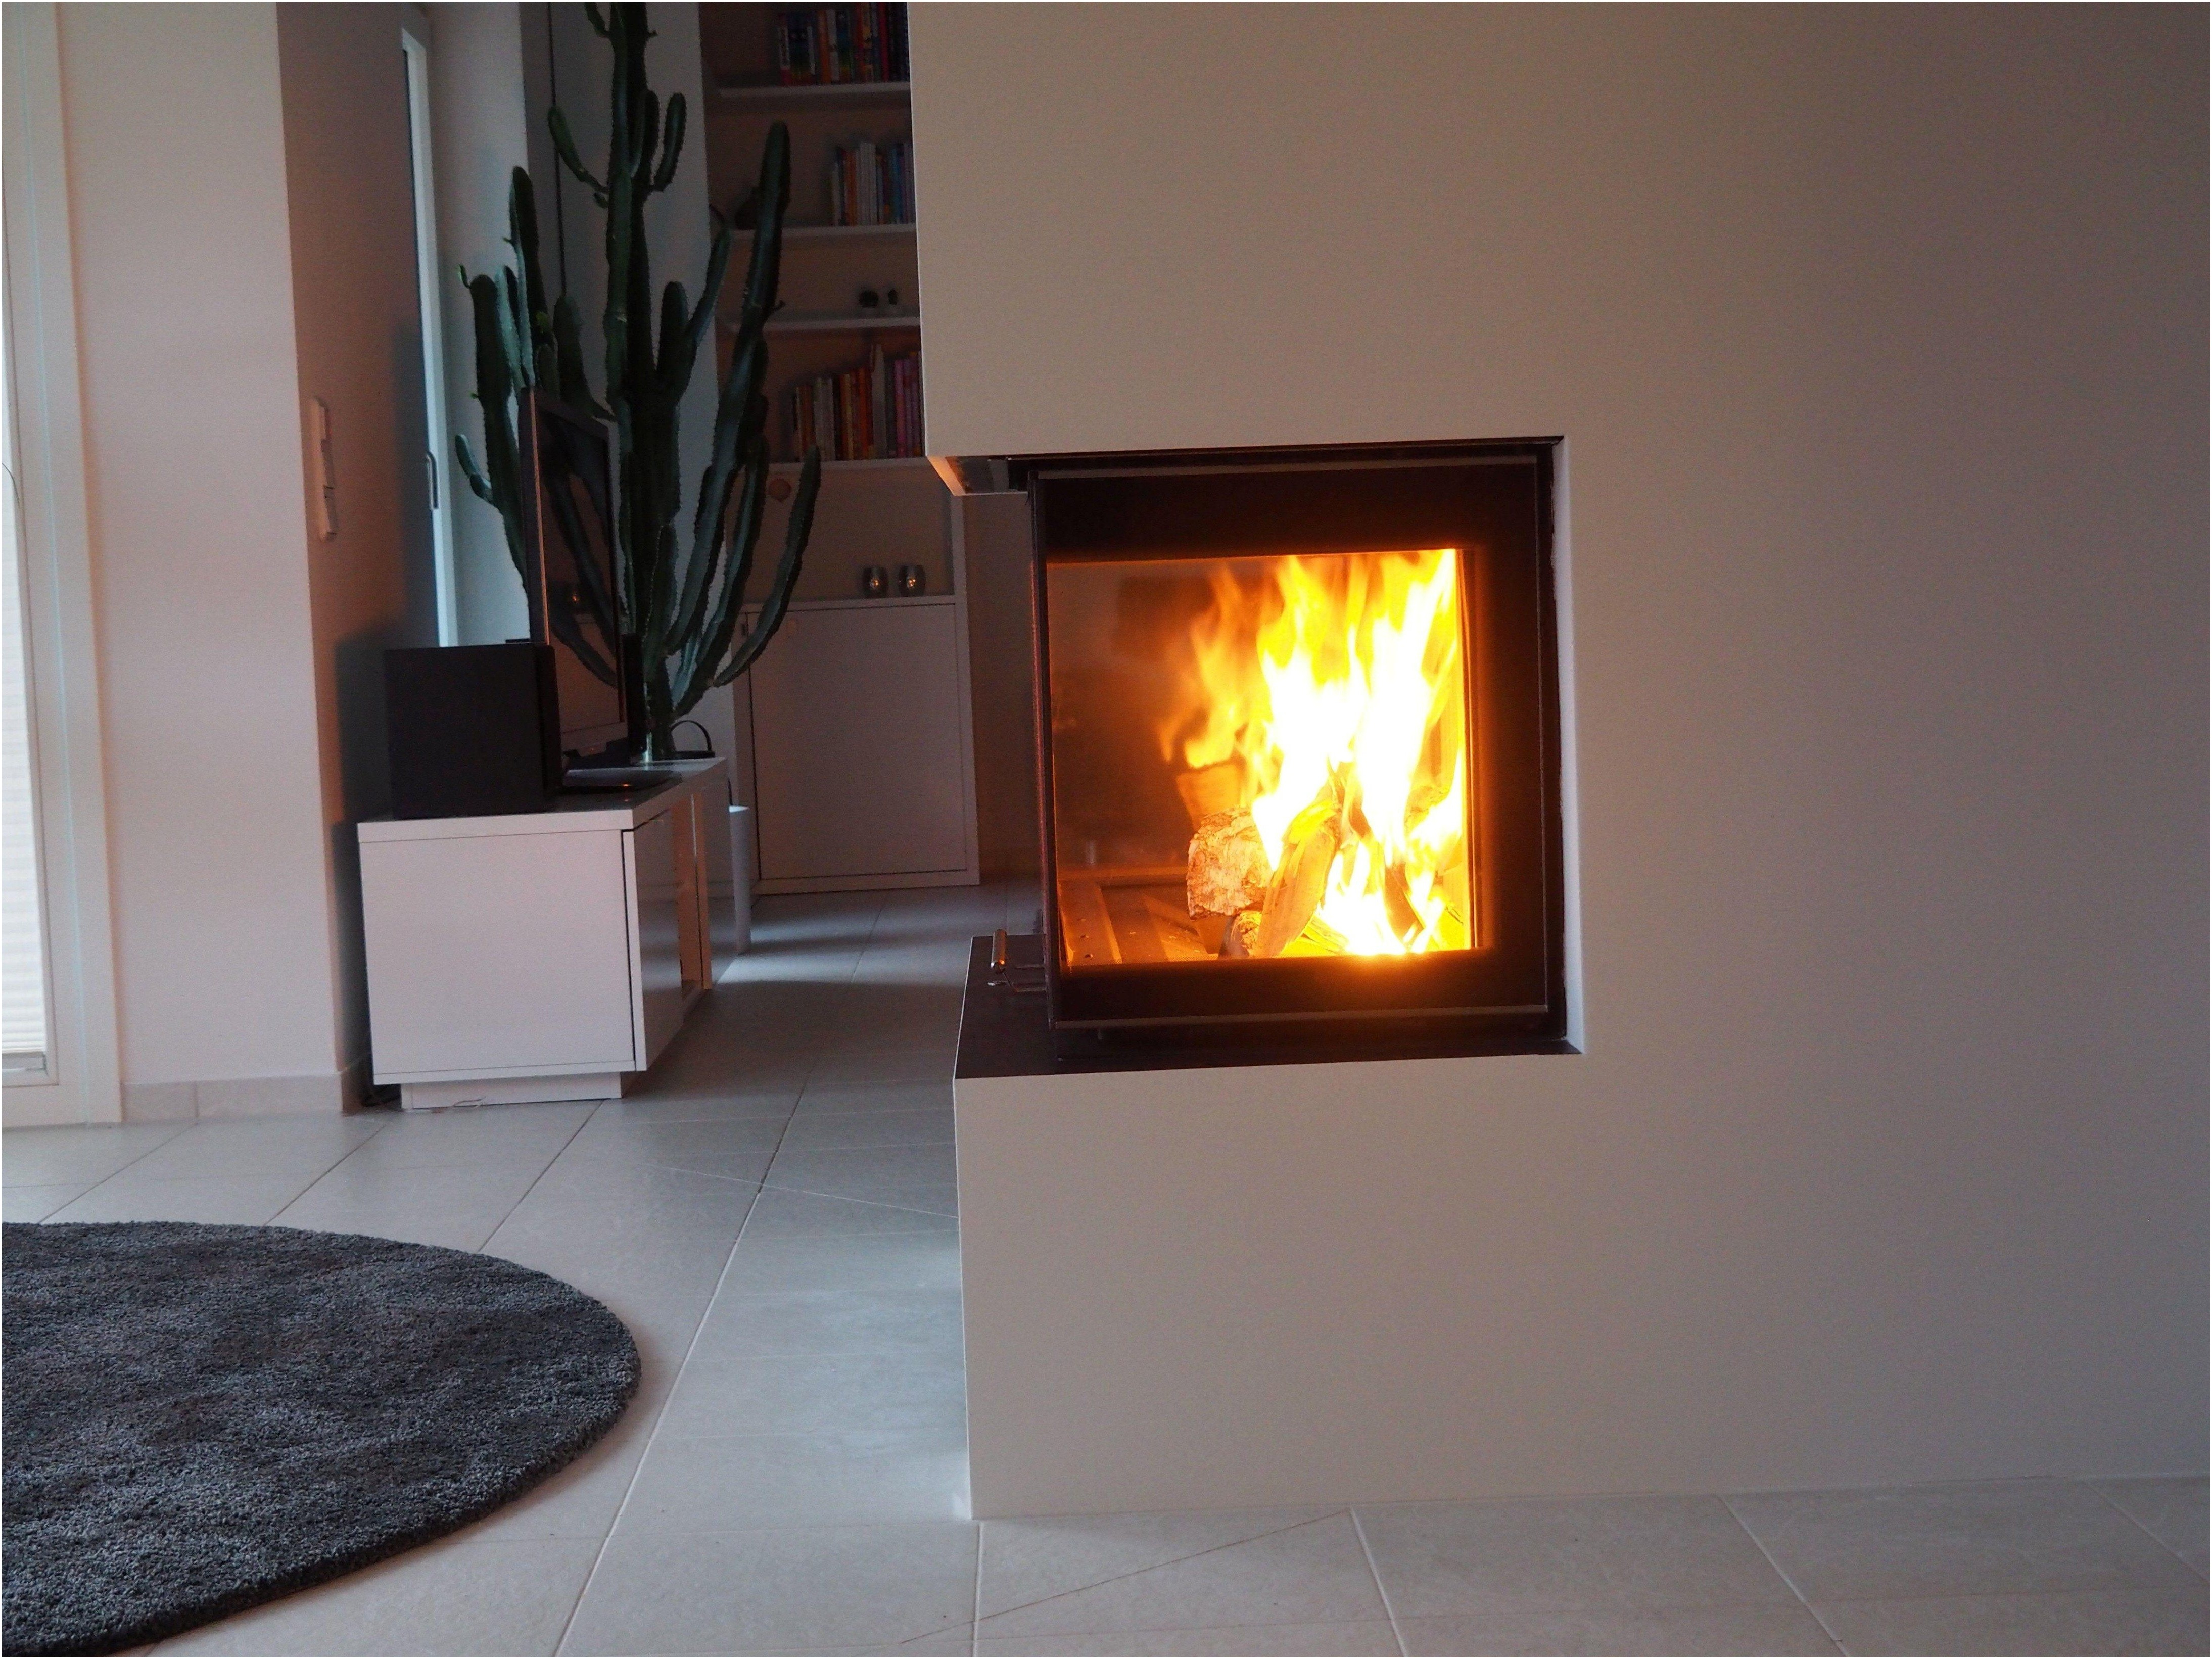 Contemporary Gas Fireplace Inspirational Design Wohnzimmer Mit Kamin Ueasnce Elegant Modern Kaminofen